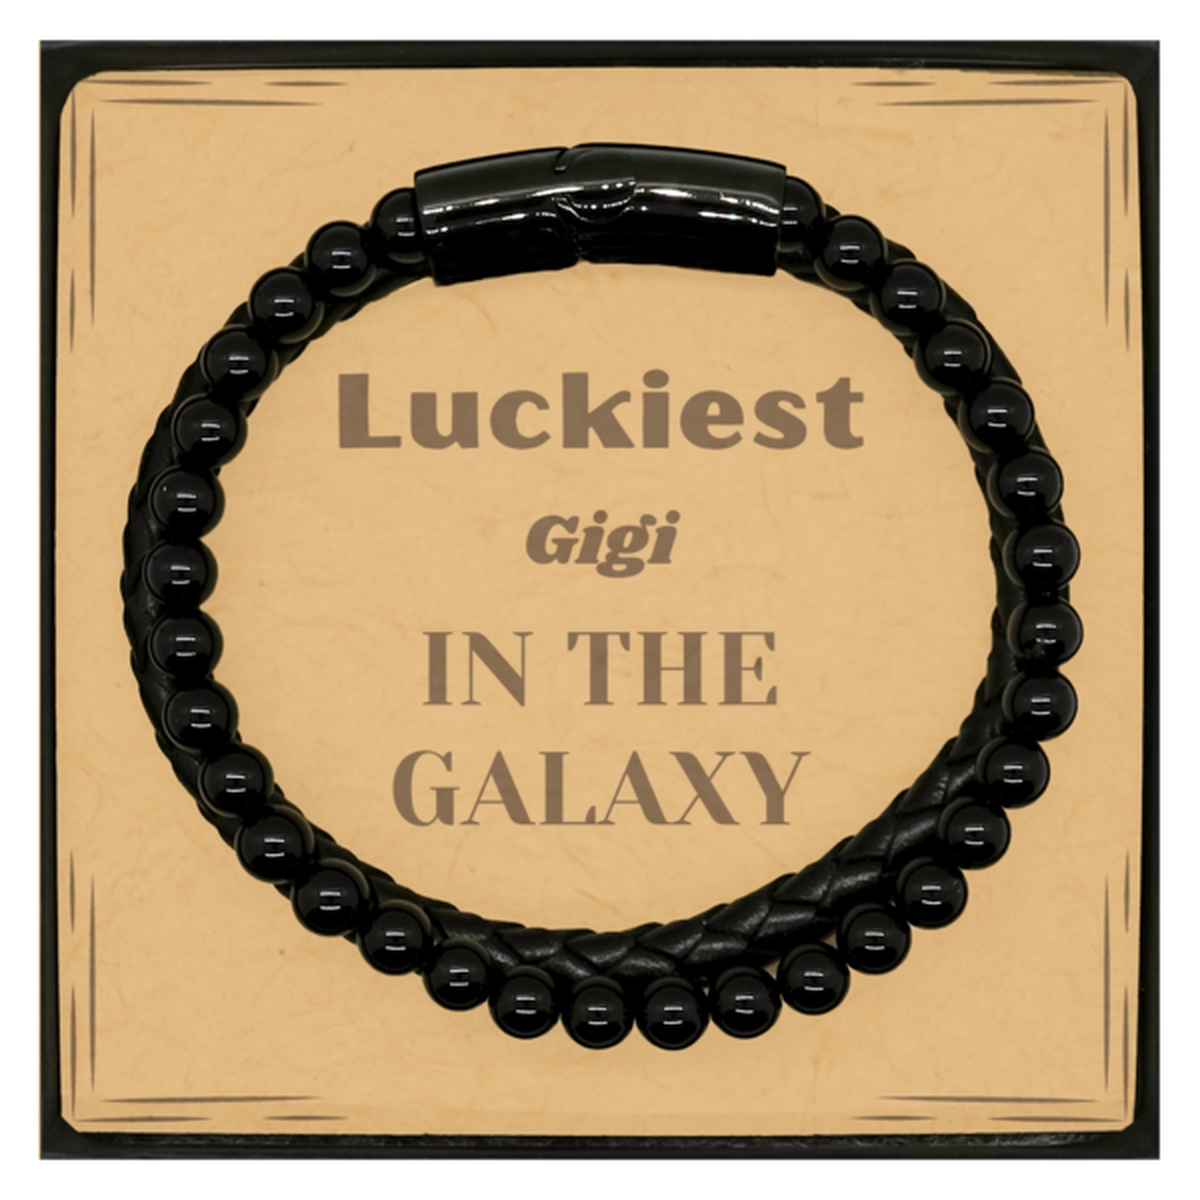 Luckiest Gigi in the Galaxy, To My Gigi Message Card Gifts, Christmas Gigi Stone Leather Bracelets Gifts, X-mas Birthday Unique Gifts For Gigi Men Women